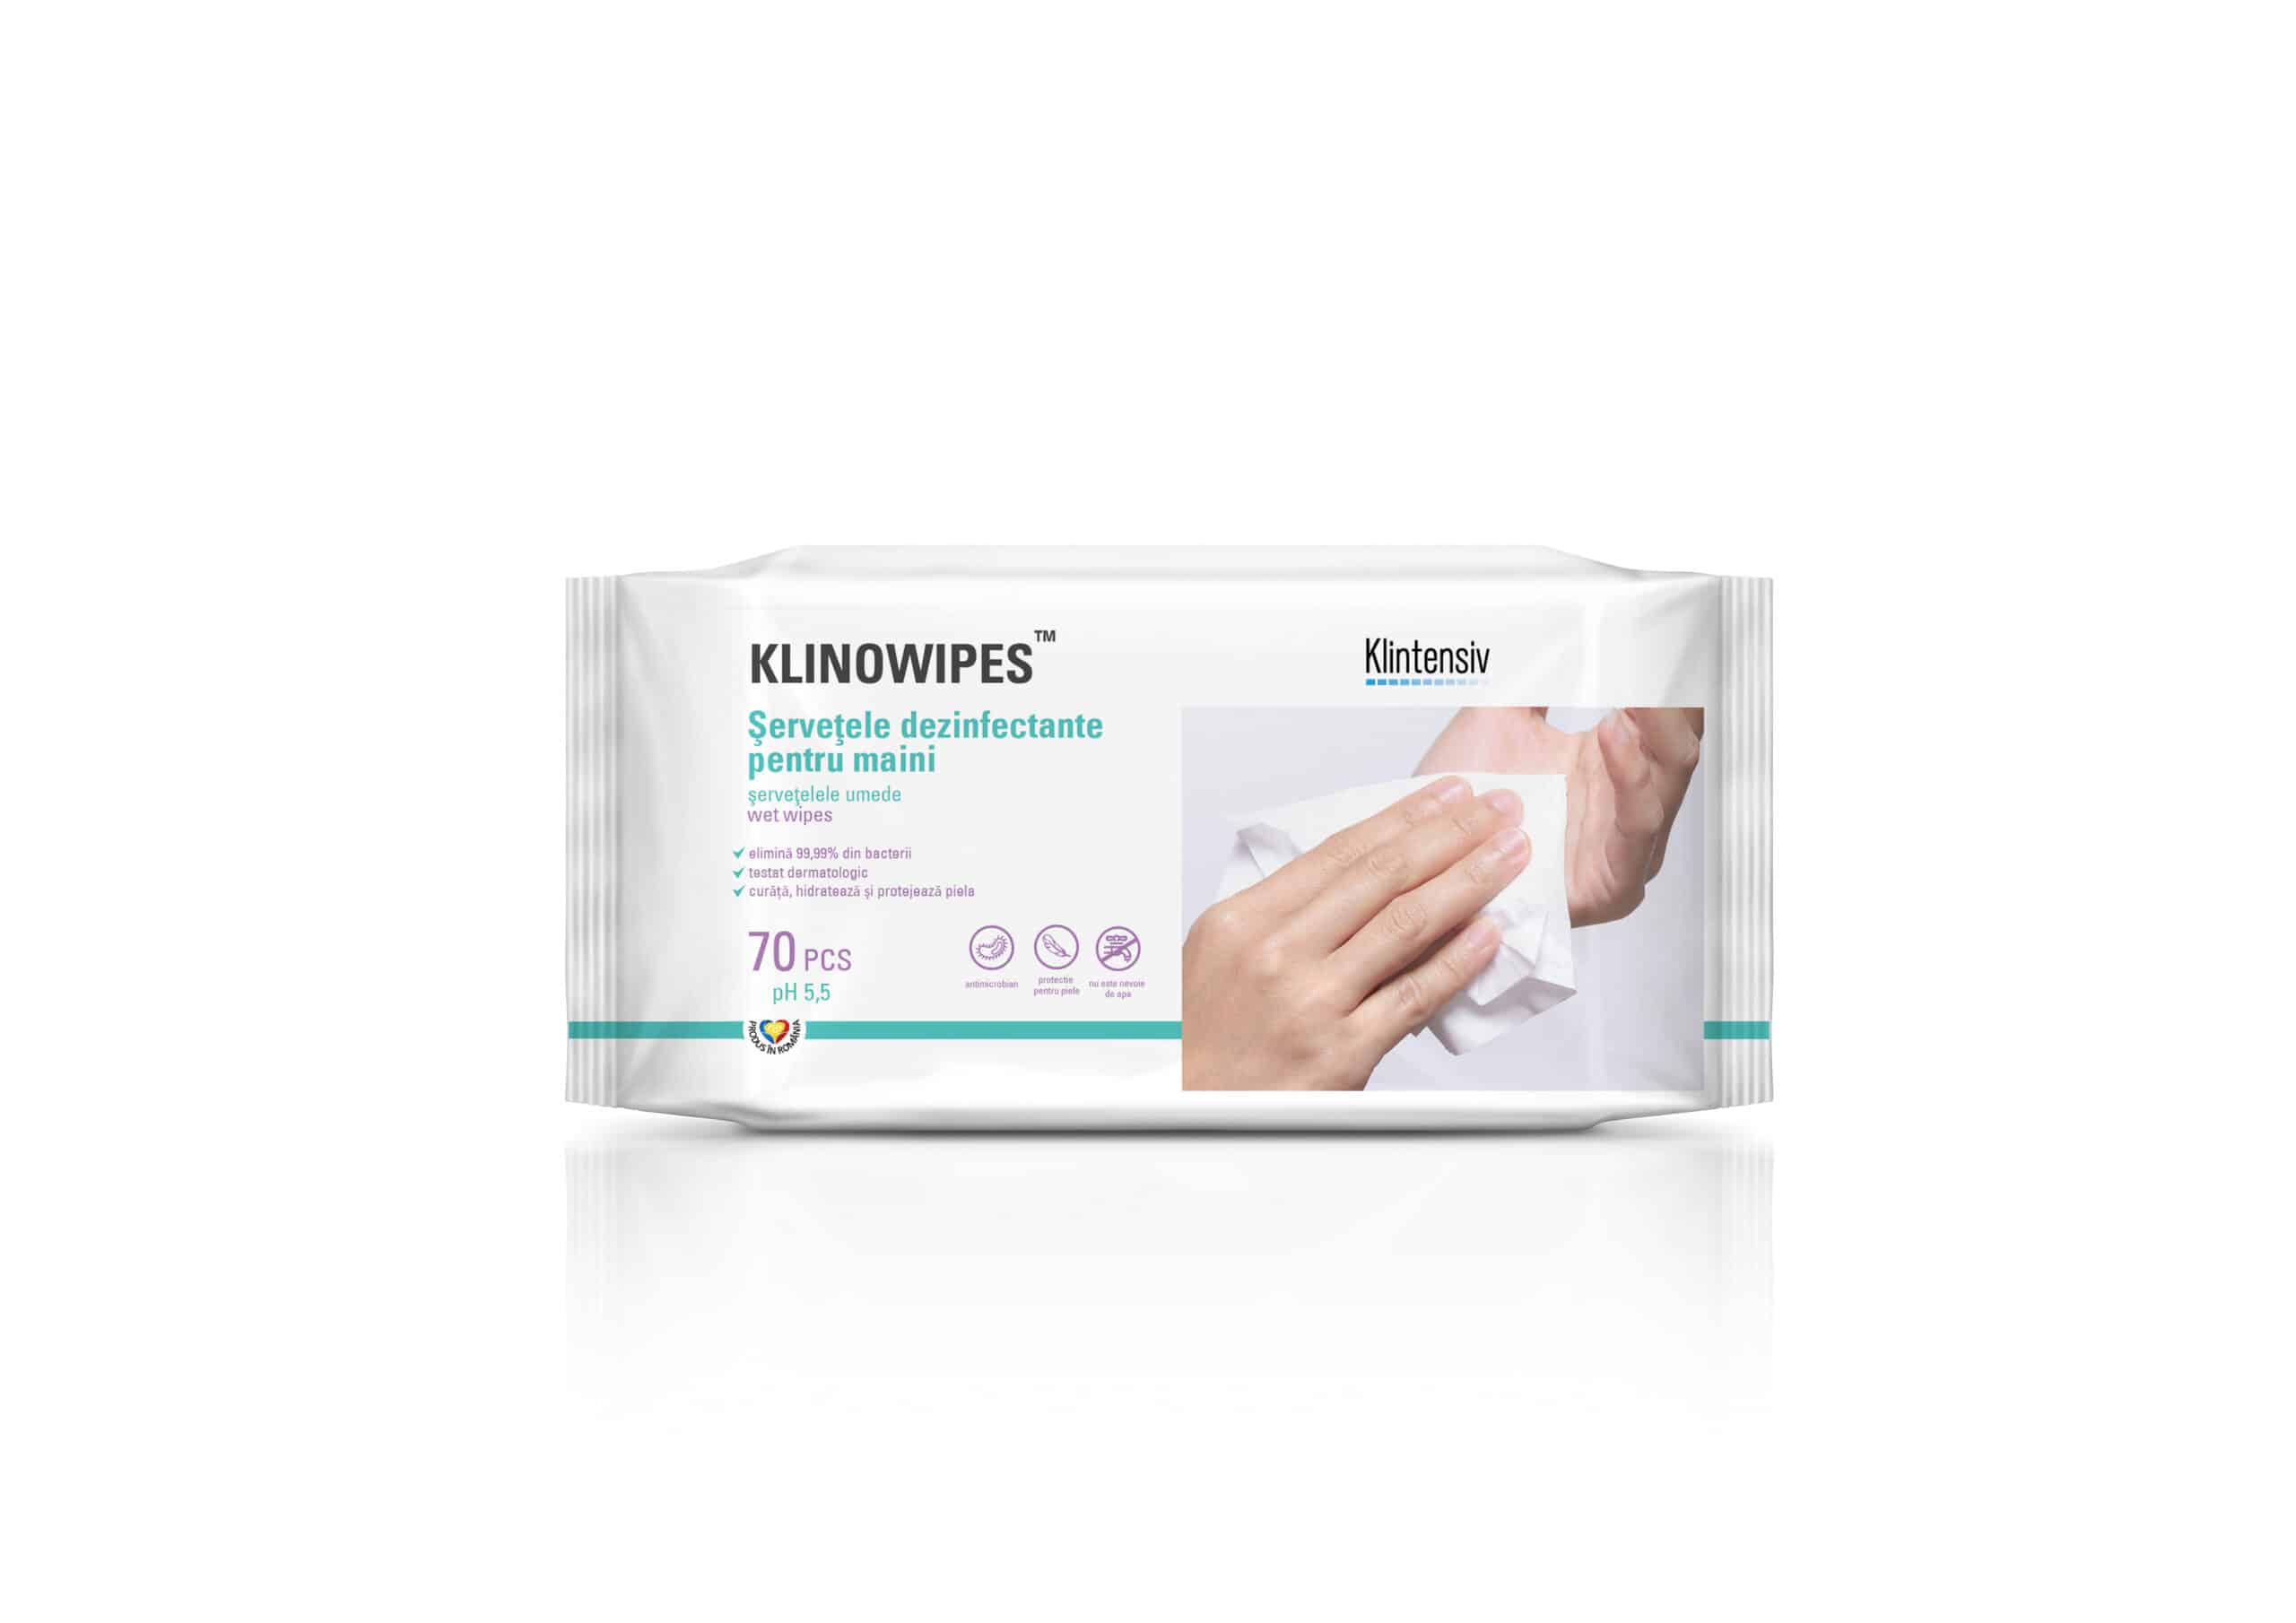 KLINOWIPES™ – Servetele dezinfectante pentru maini 70 buc. Klintensiv